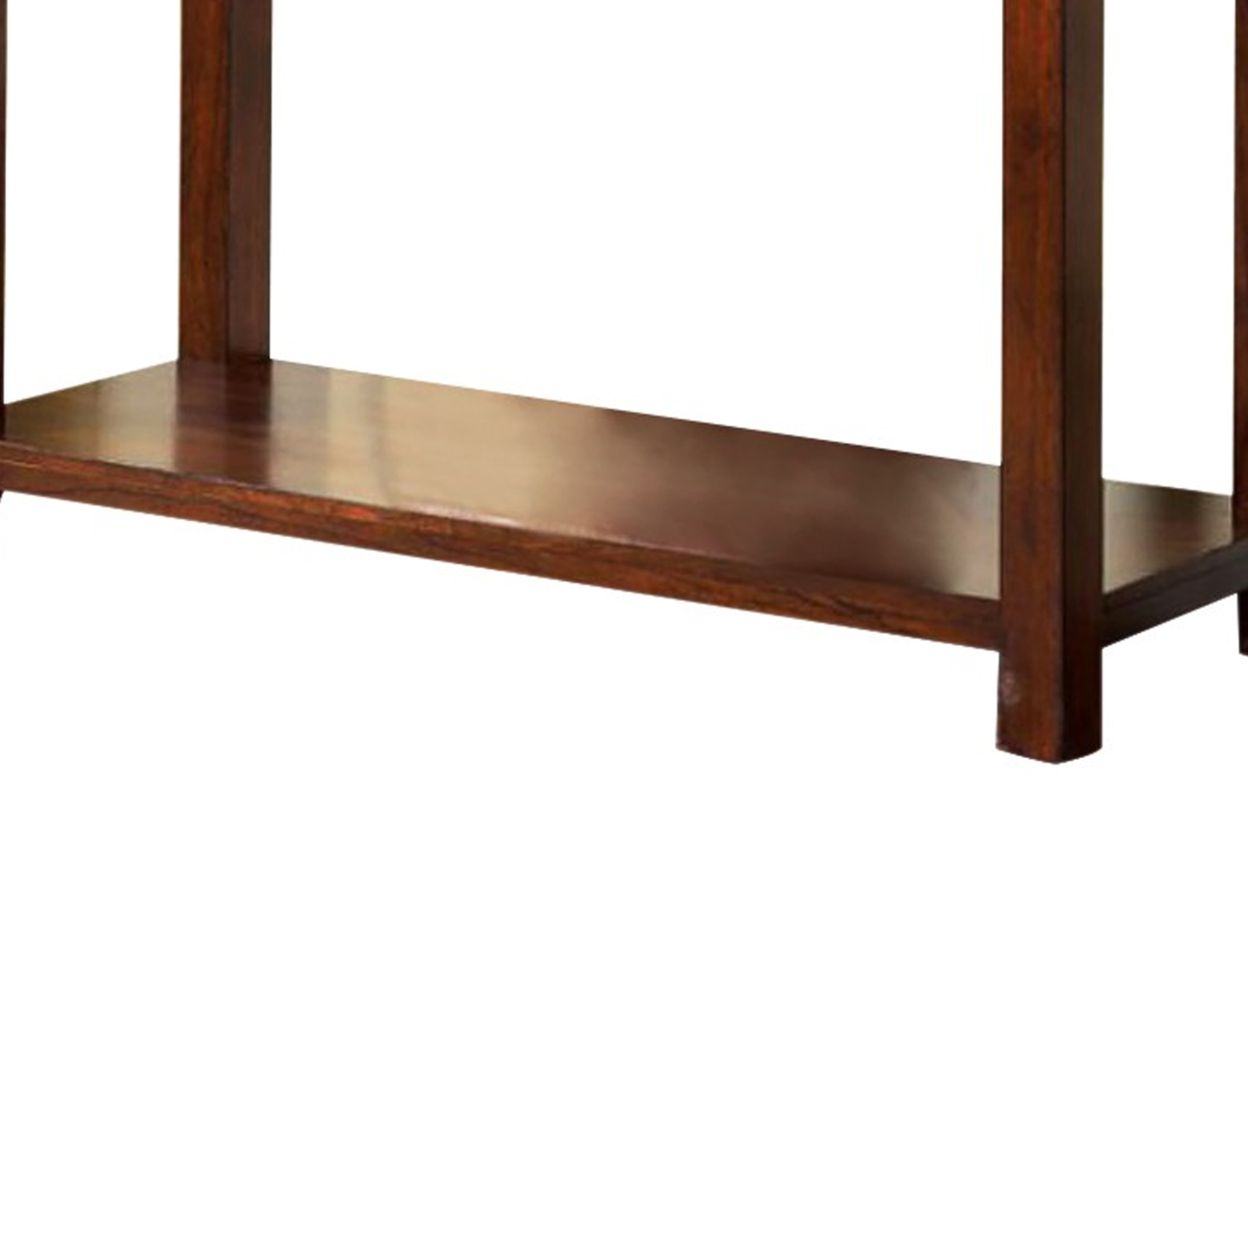 Transitional Rectangular Wooden Sofa Table With Bottom Shelf, Cherry Brown- Saltoro Sherpi